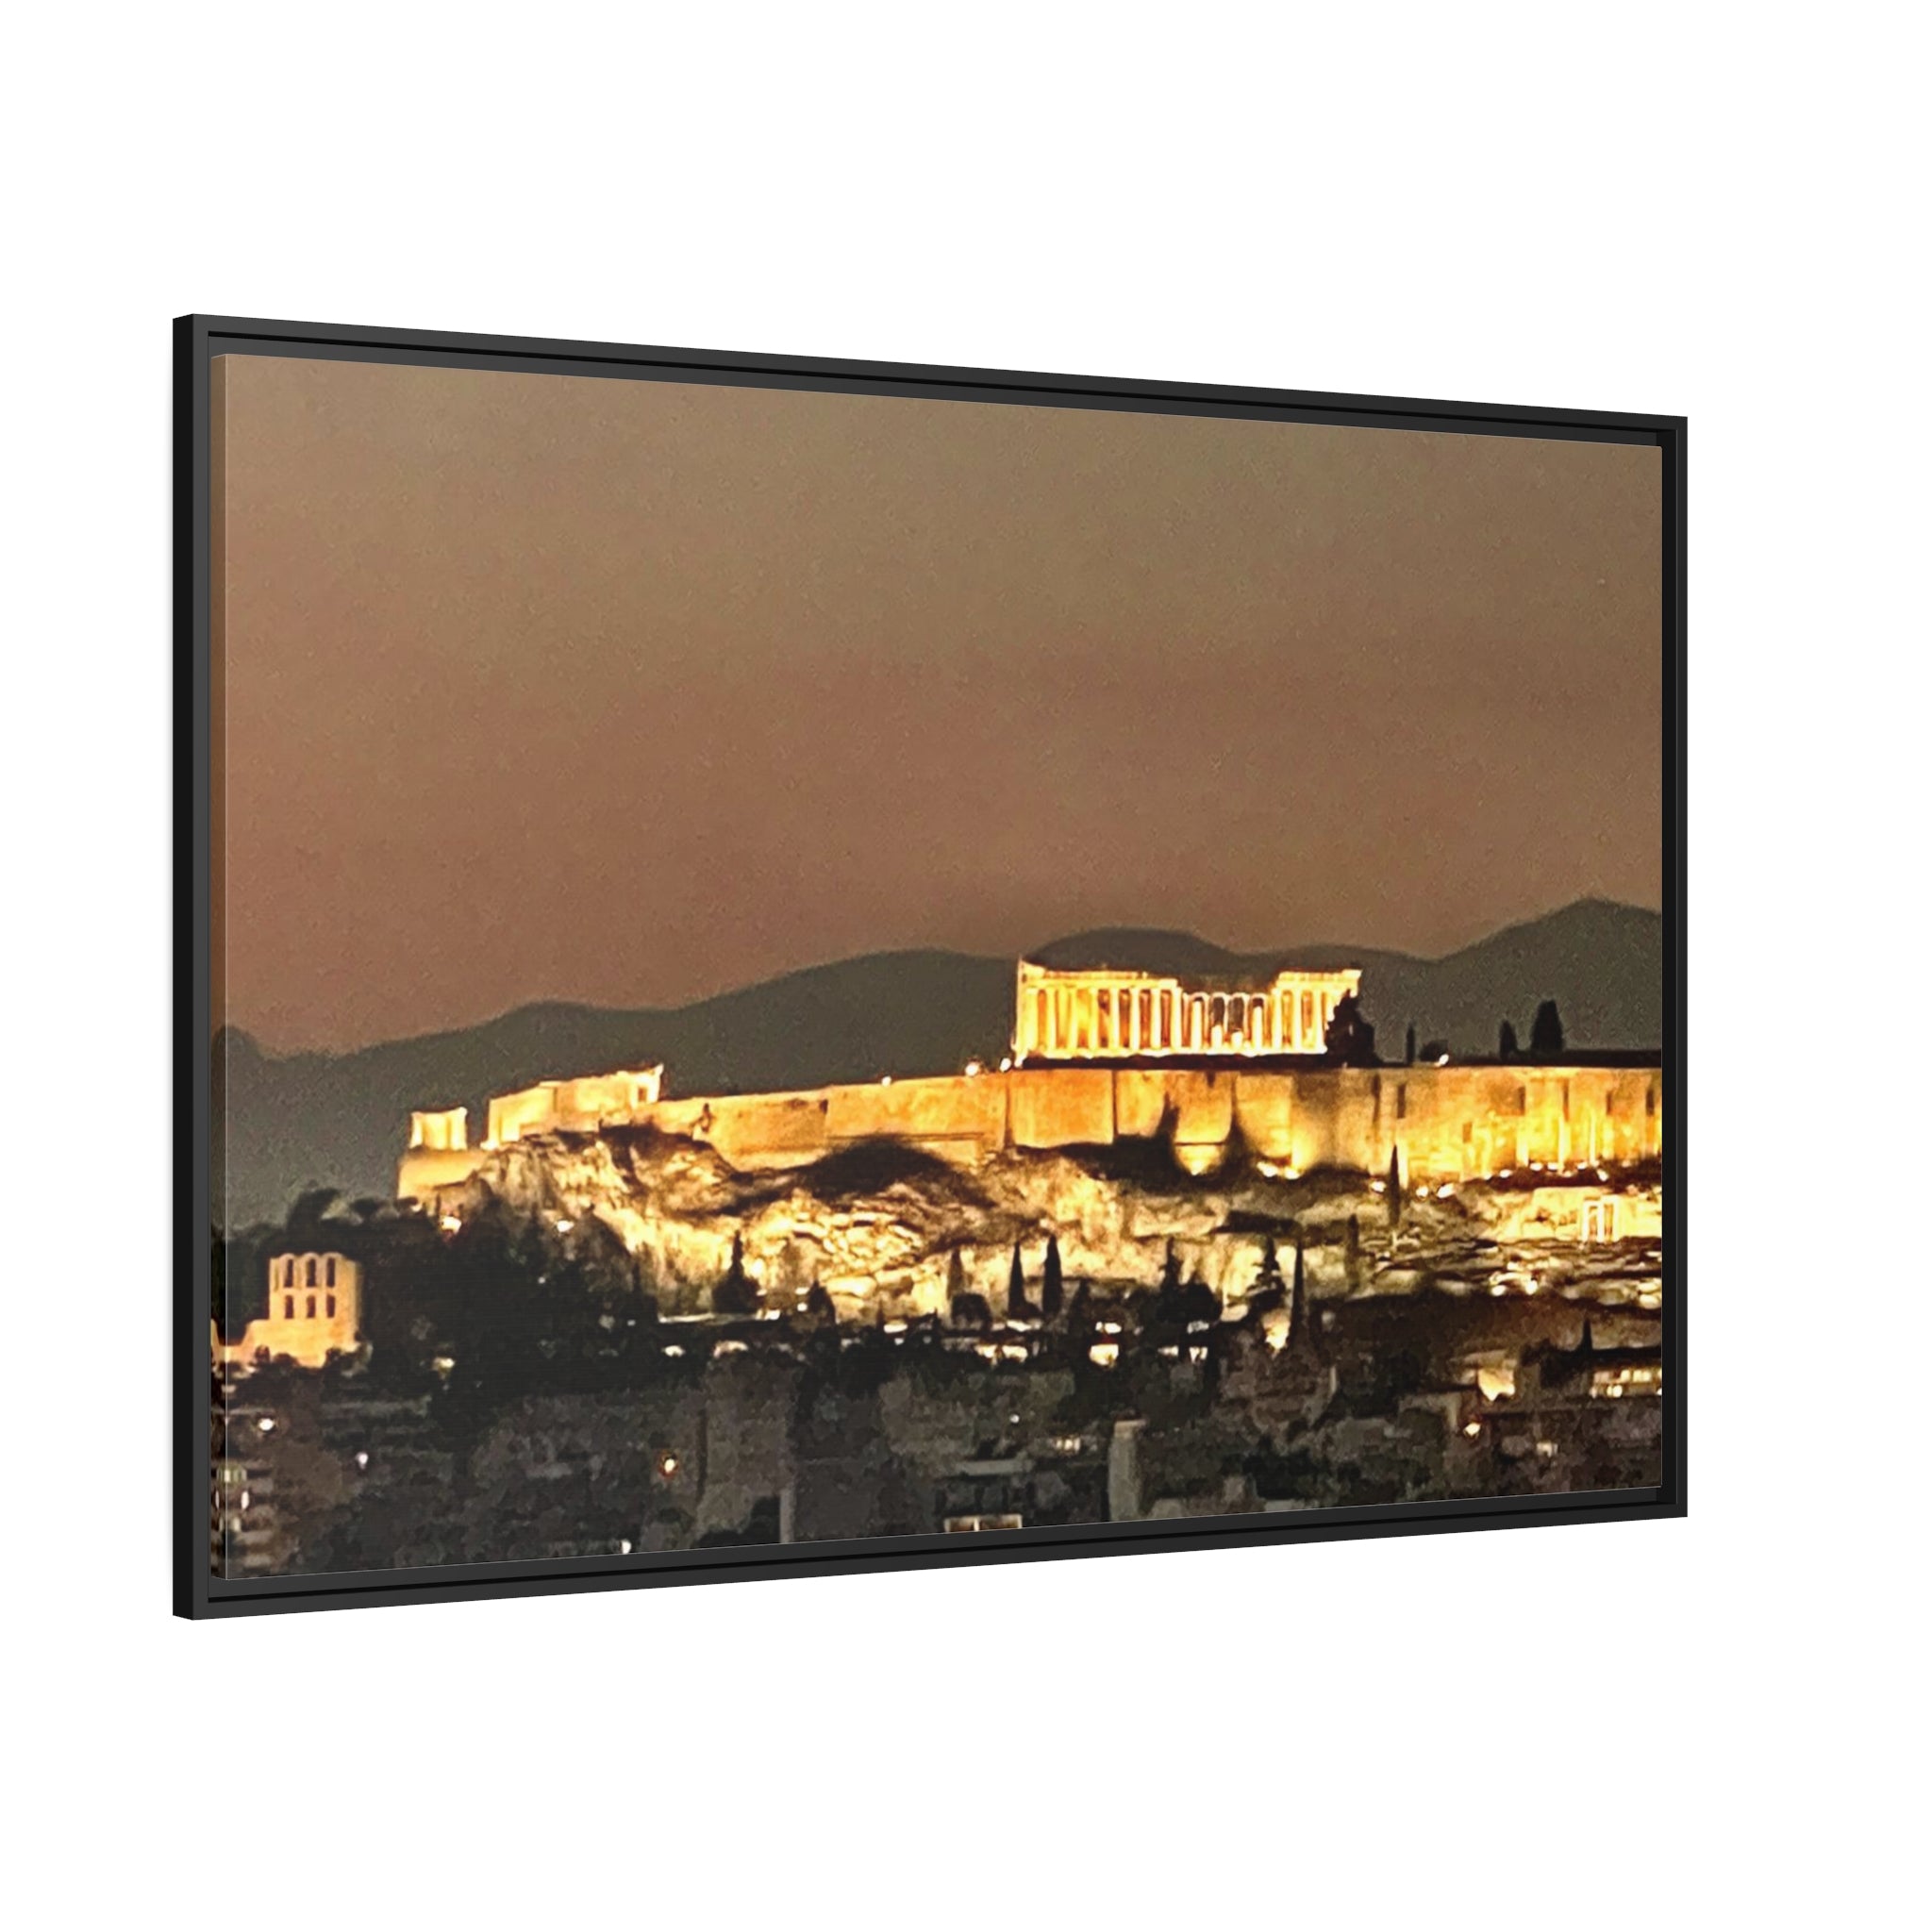 Acroplis in Greece at Night Matte Canvas, Black Frame